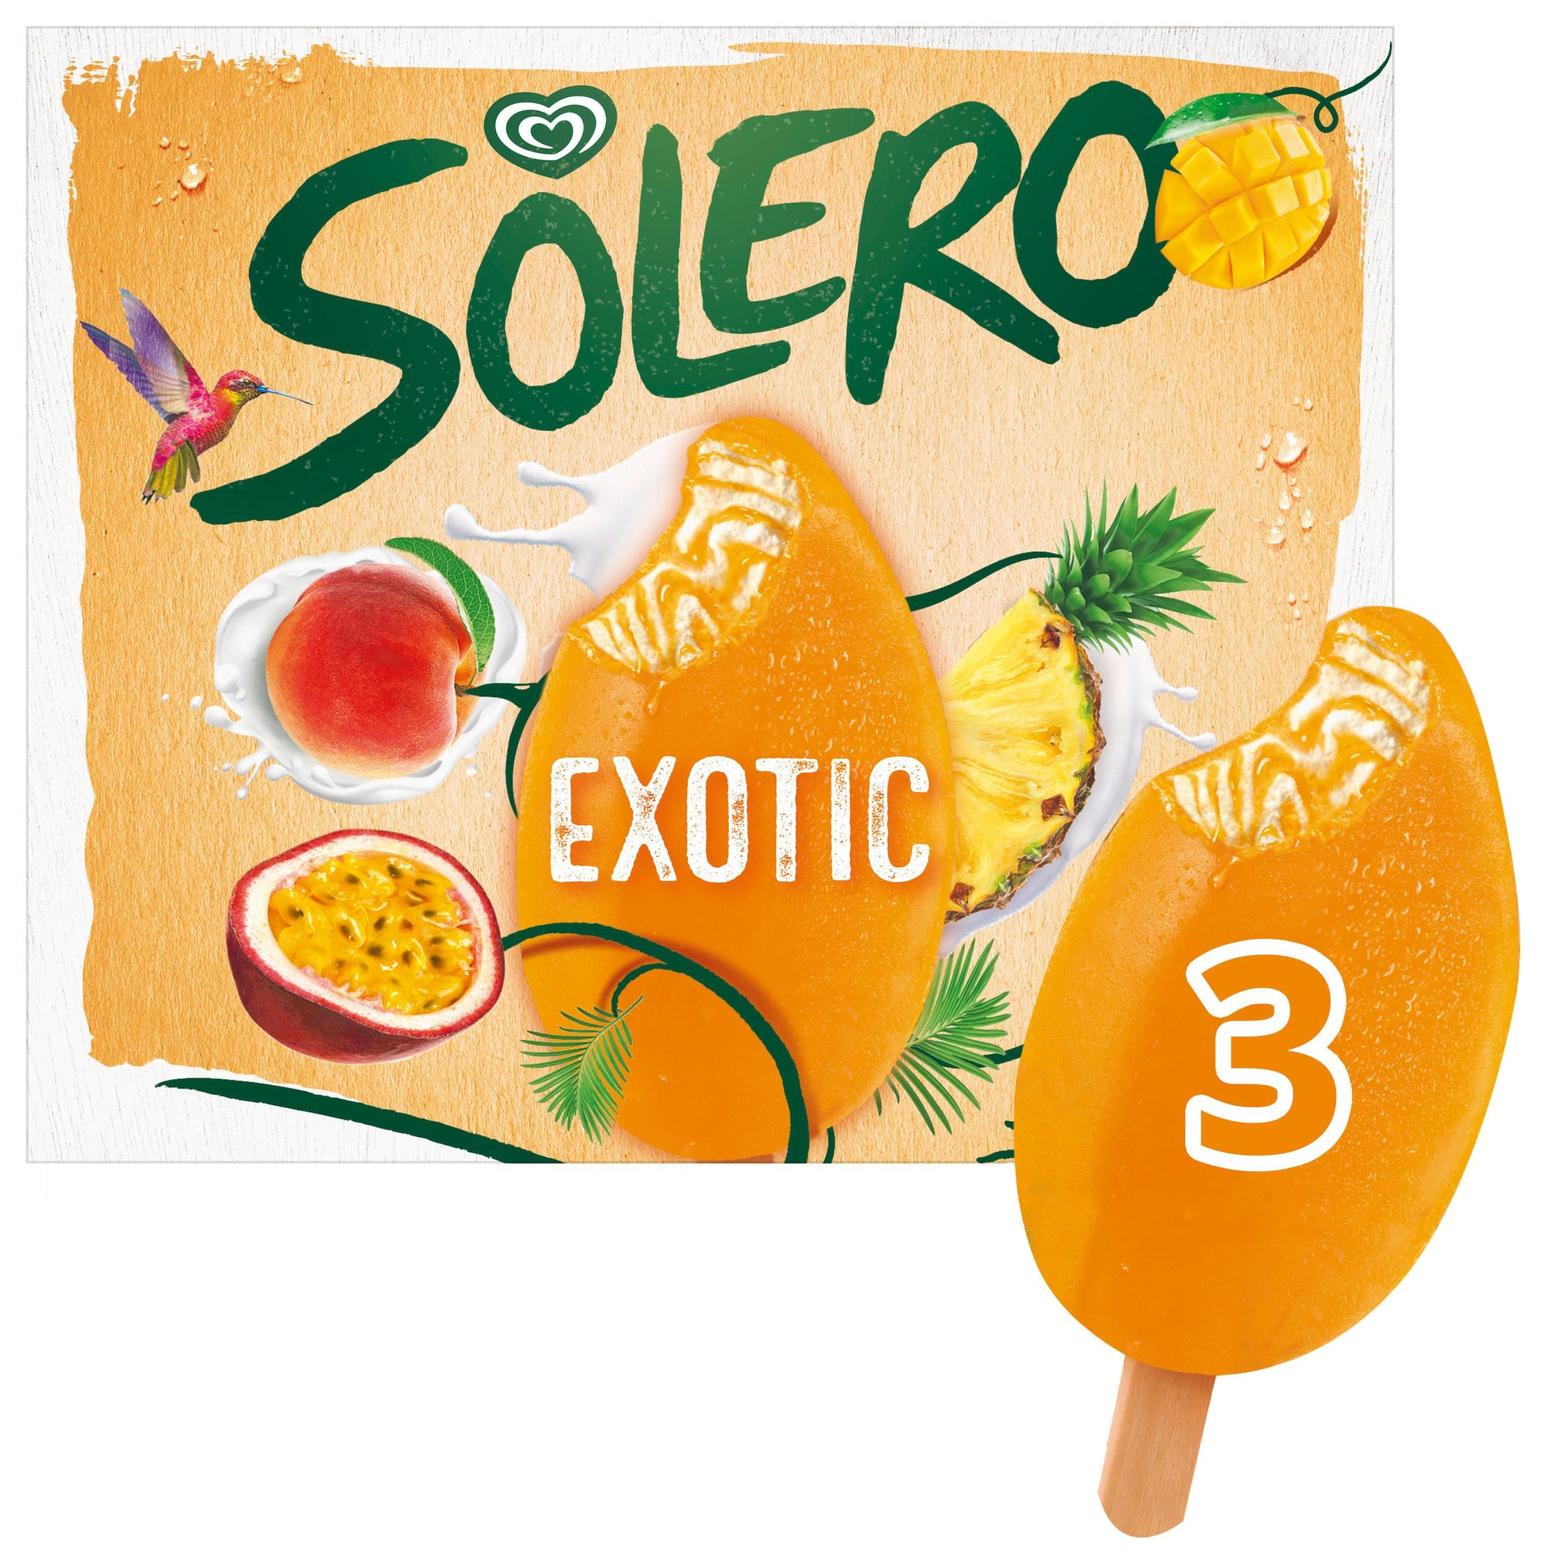 Solero  Ice Cream Exotic 3 x 90 ml offers at £1.85 in Iceland